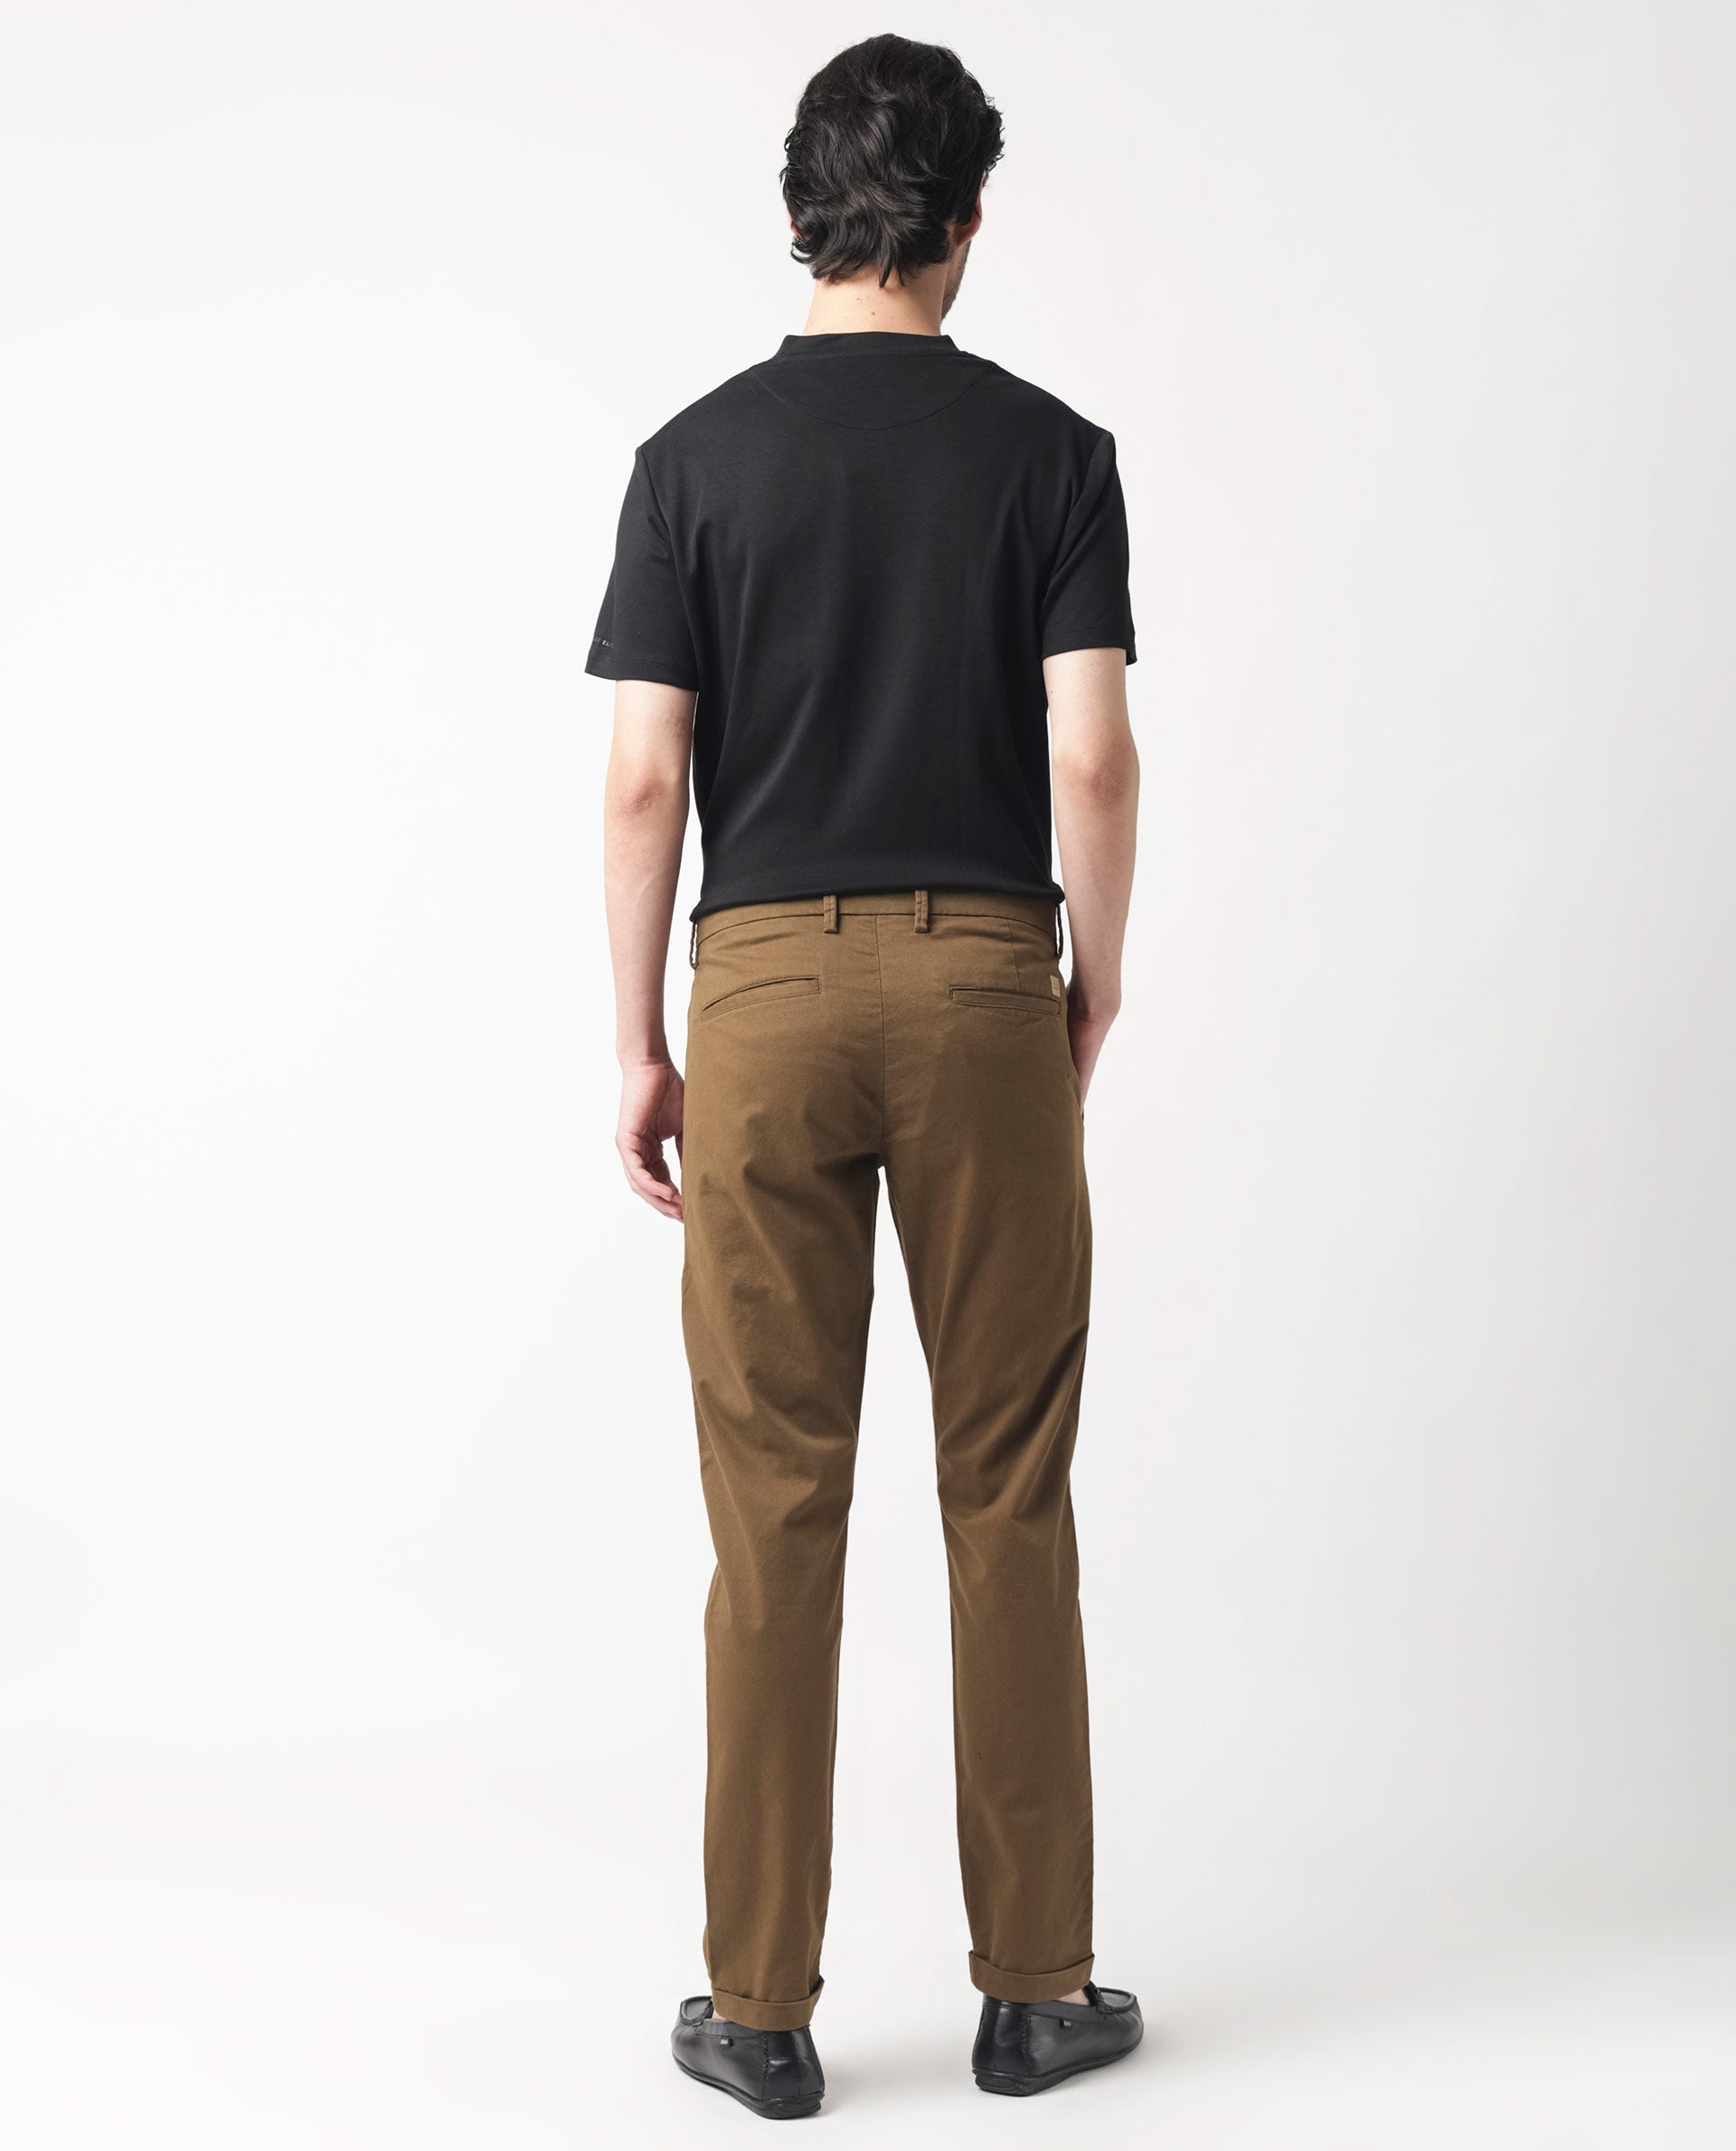 gap khaki pants skinny performance men's brown new size 32/30 | eBay